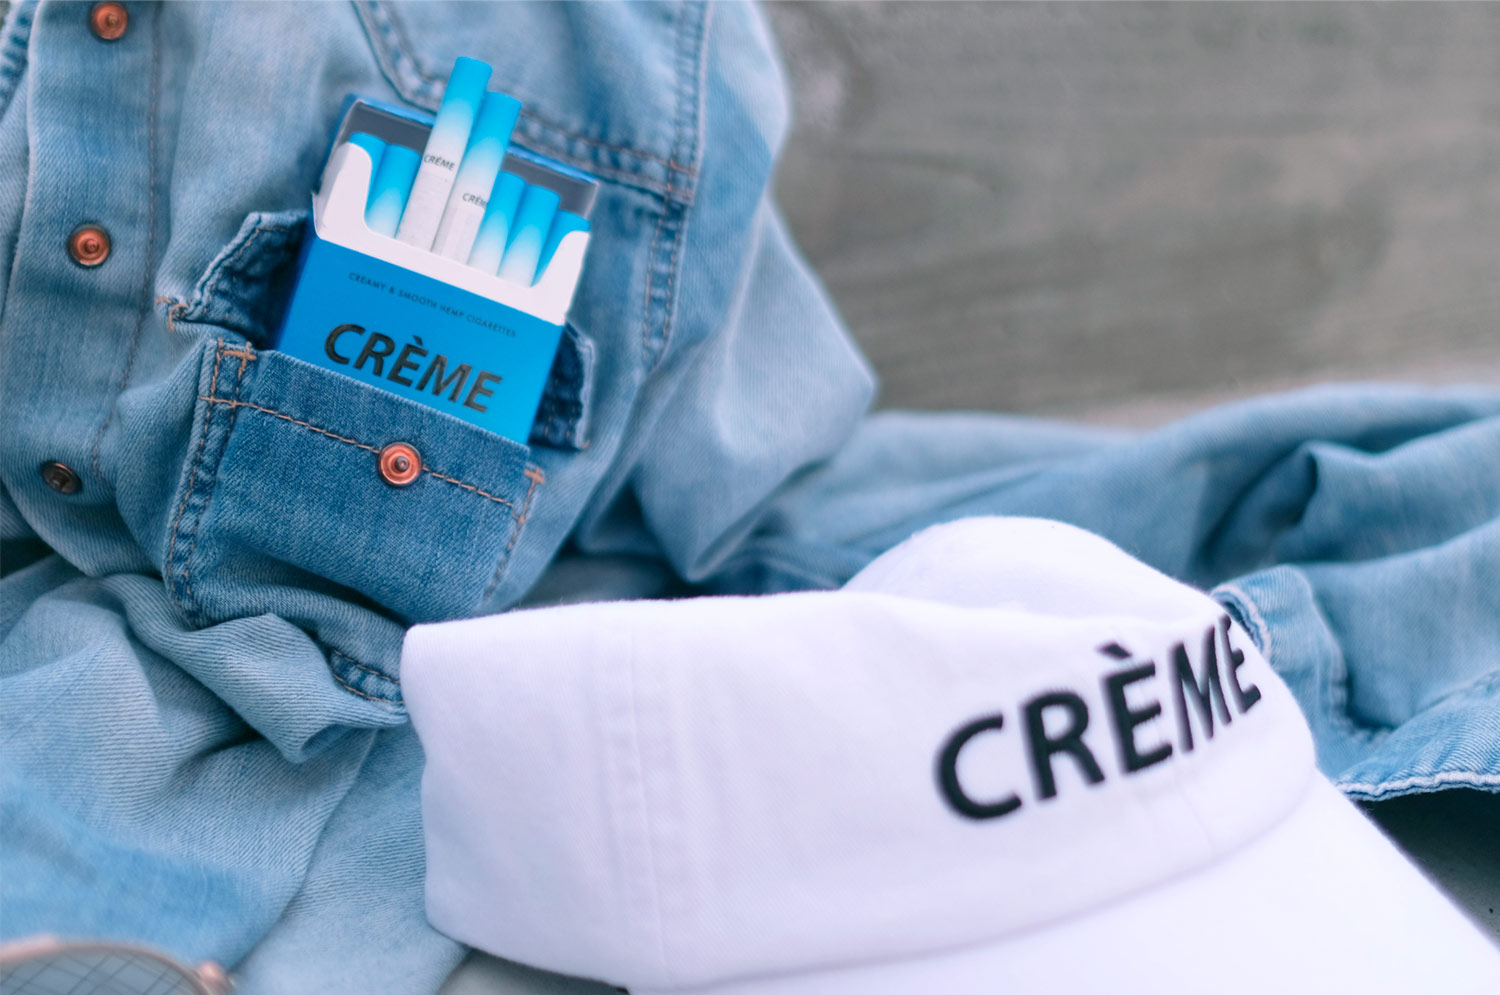 creme cbd cigarettes, white hat, denim jacket